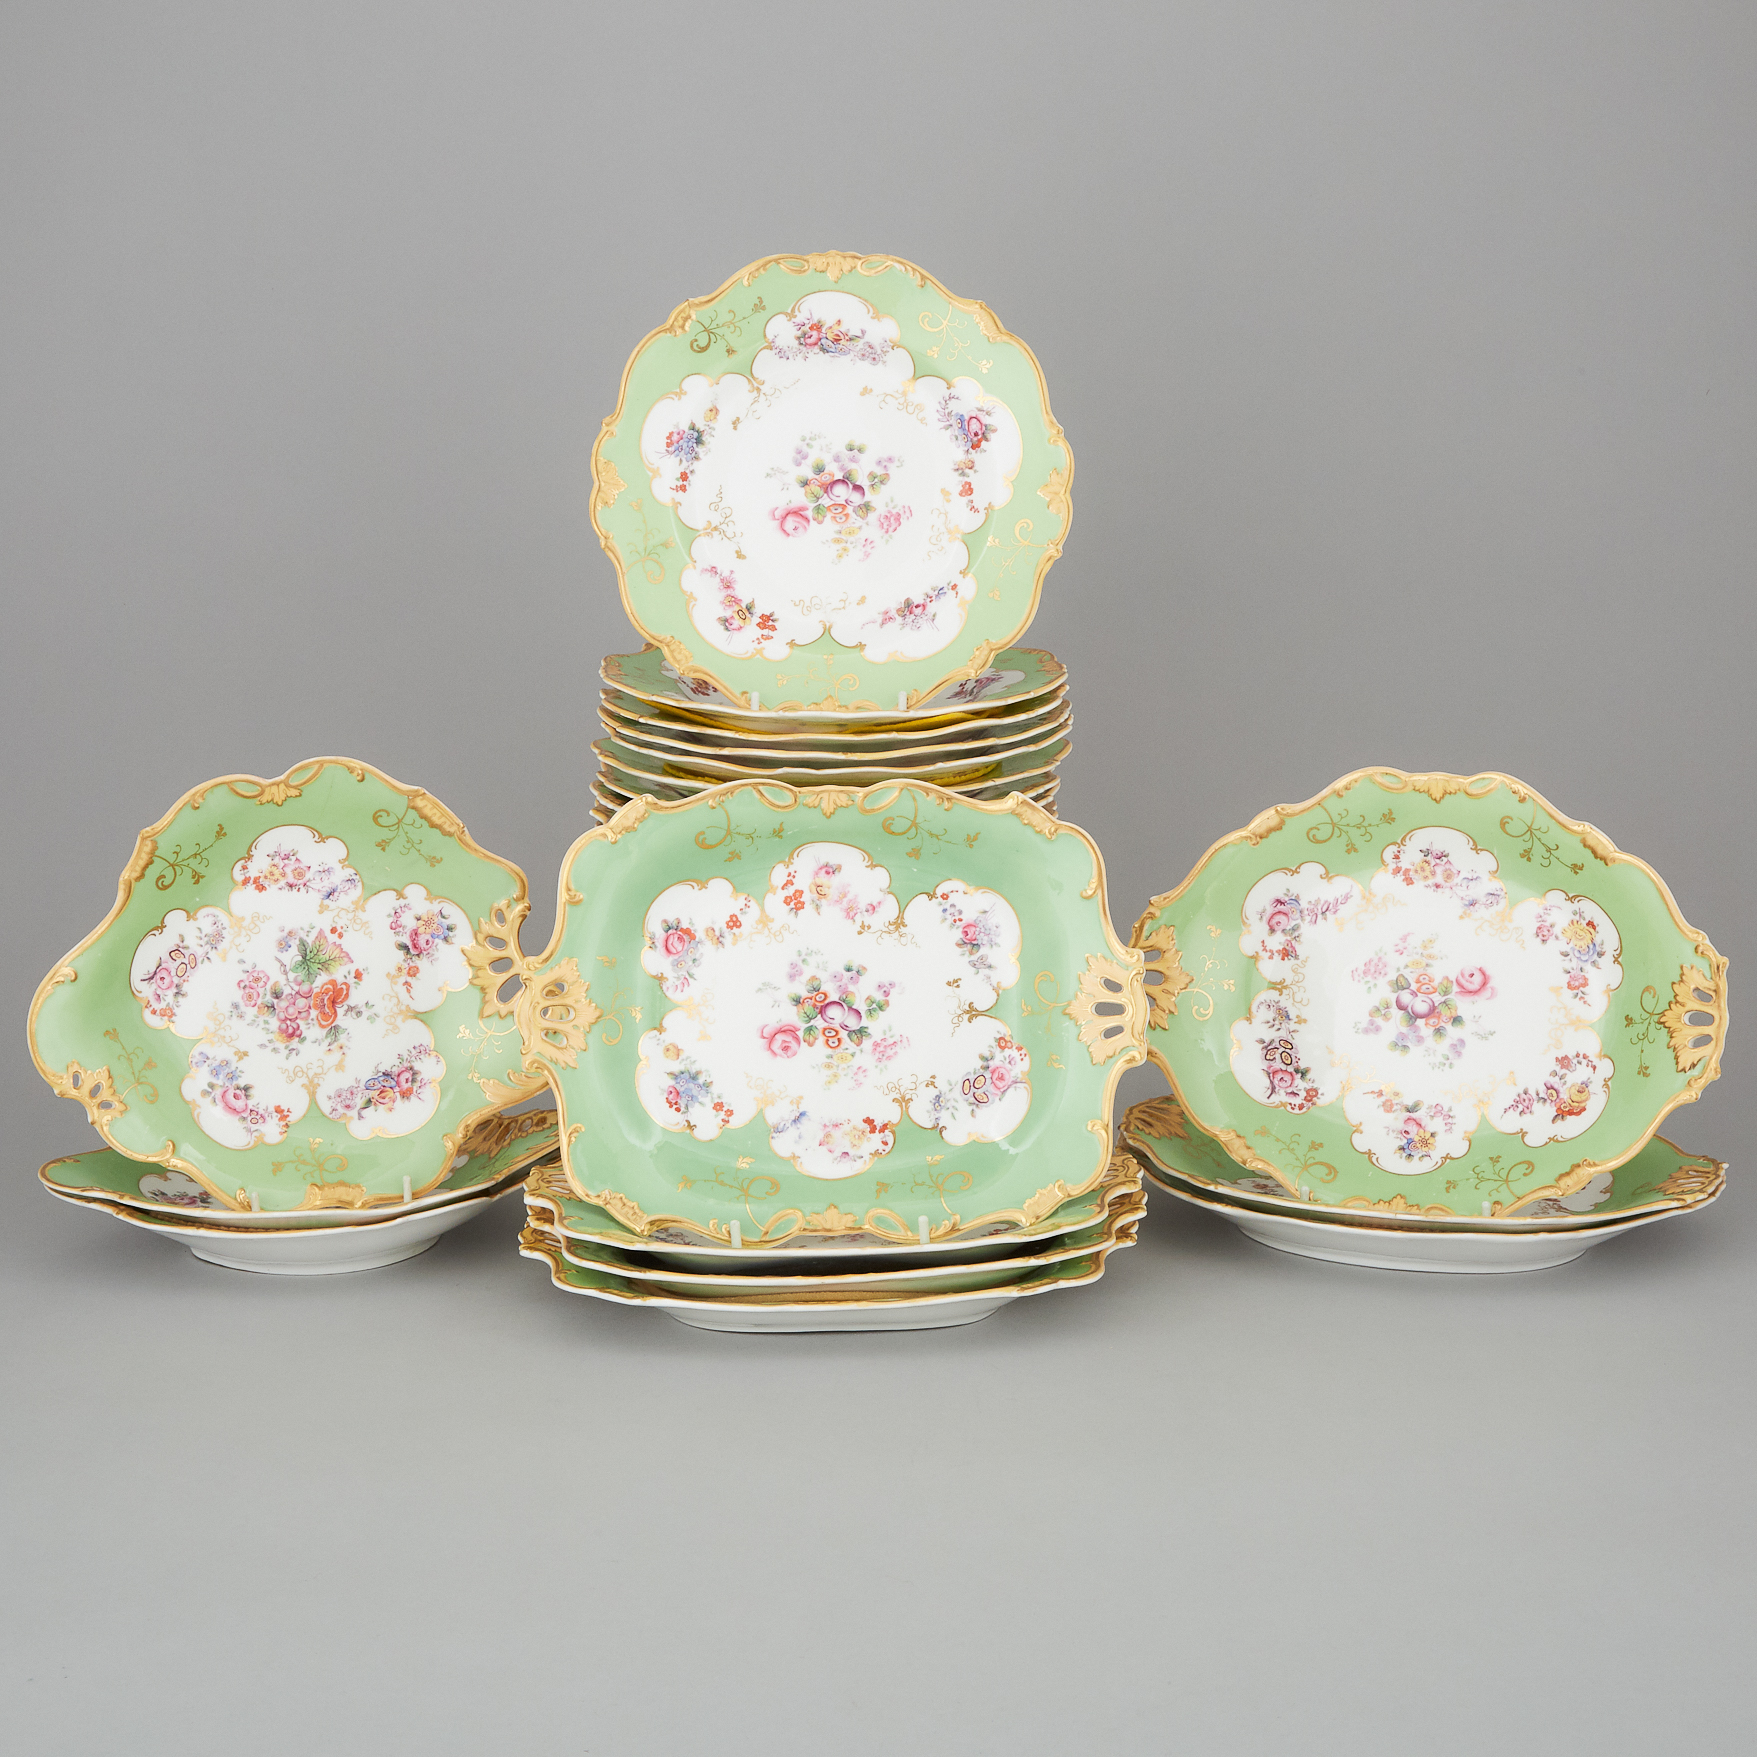 English Porcelain Apple Green Ground Dessert Service, possibly Coalport, mid-19th century